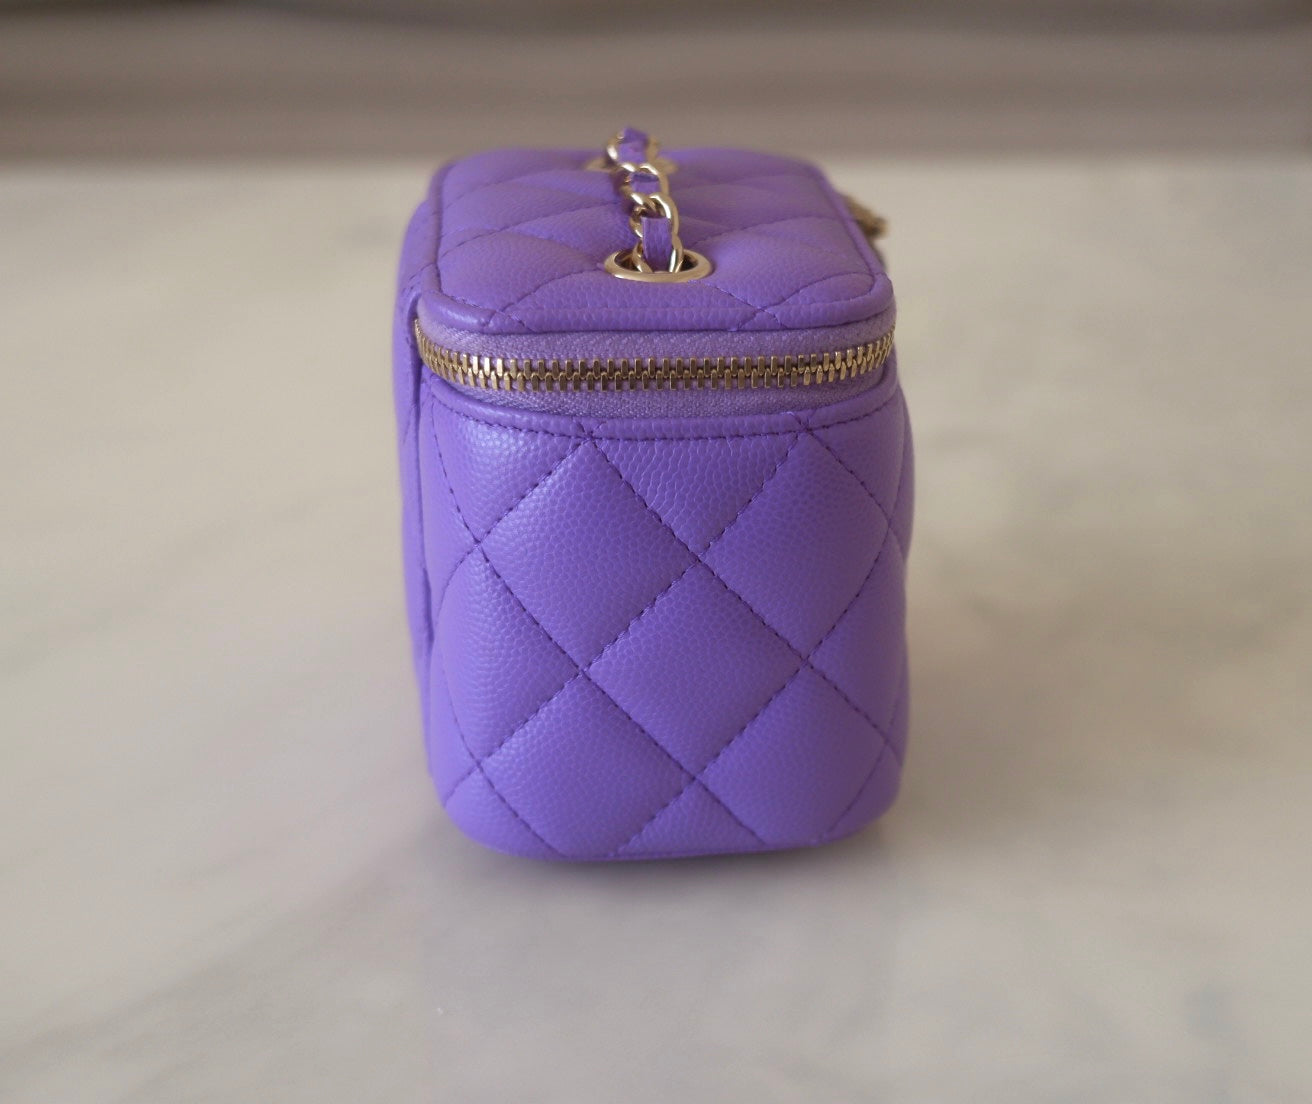 Chanel Purple Classic Rectangular Mini Flap Bag